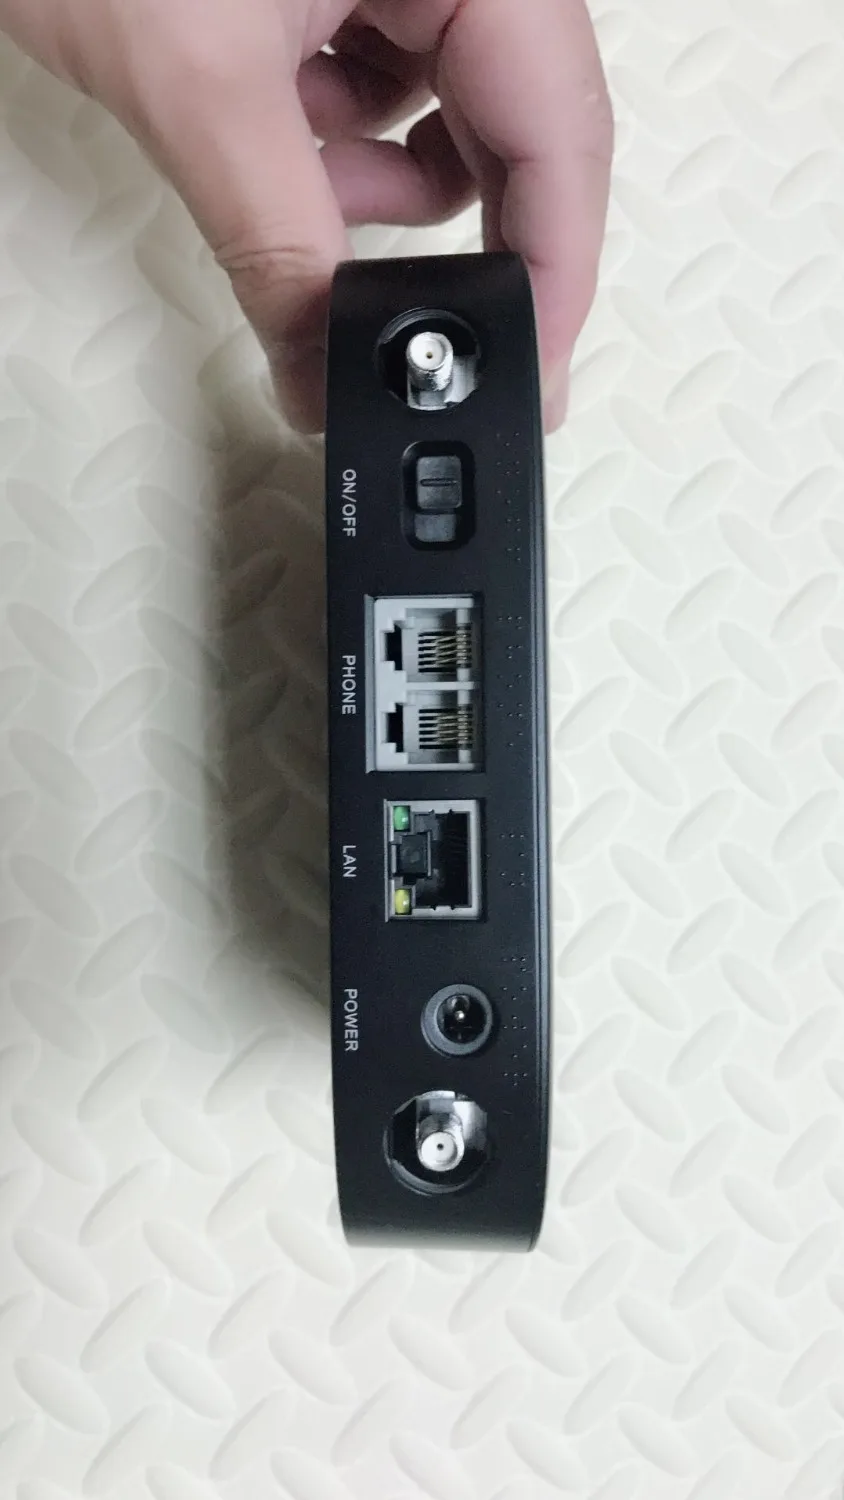 AT&T zte MF279 карман 4 аппарат не привязан к оператору сотовой связи Wi-Fi маршрутизатор Поддержка B2/B4/B5/B12/B29/B30 4G Мобильный маршрутизатор компиляция java-приложений